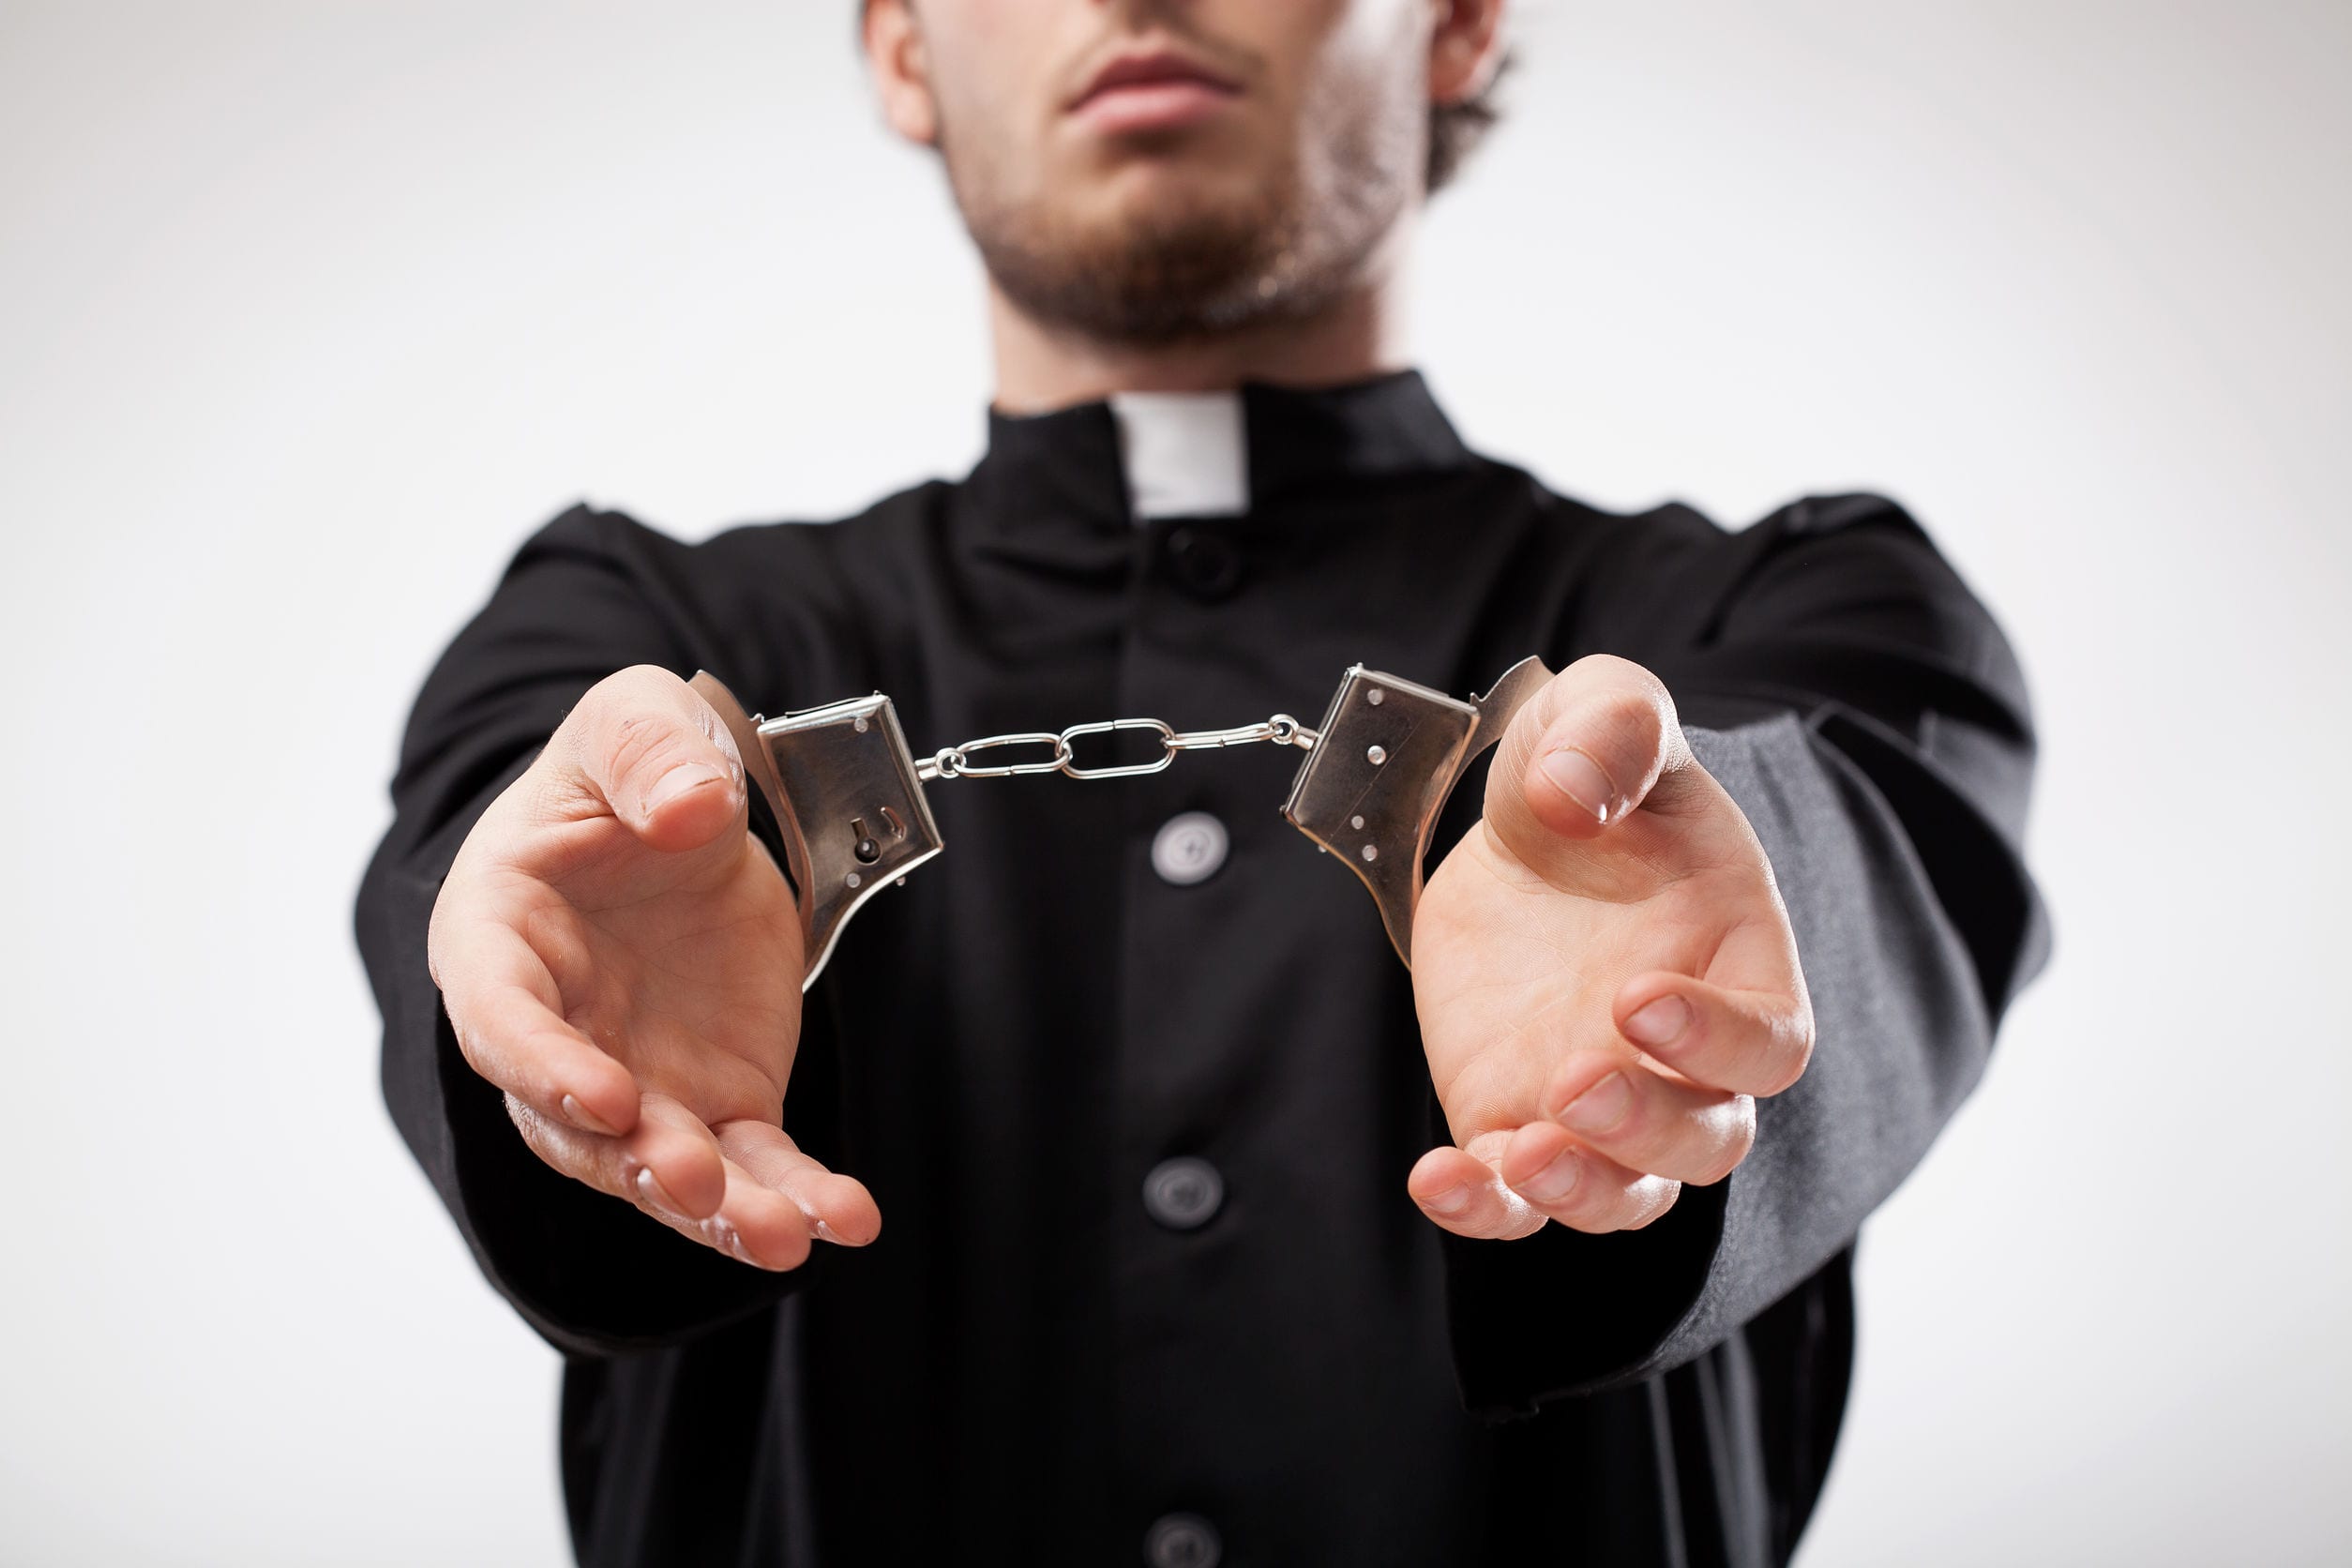 Chicago Clergy Molestation Victims